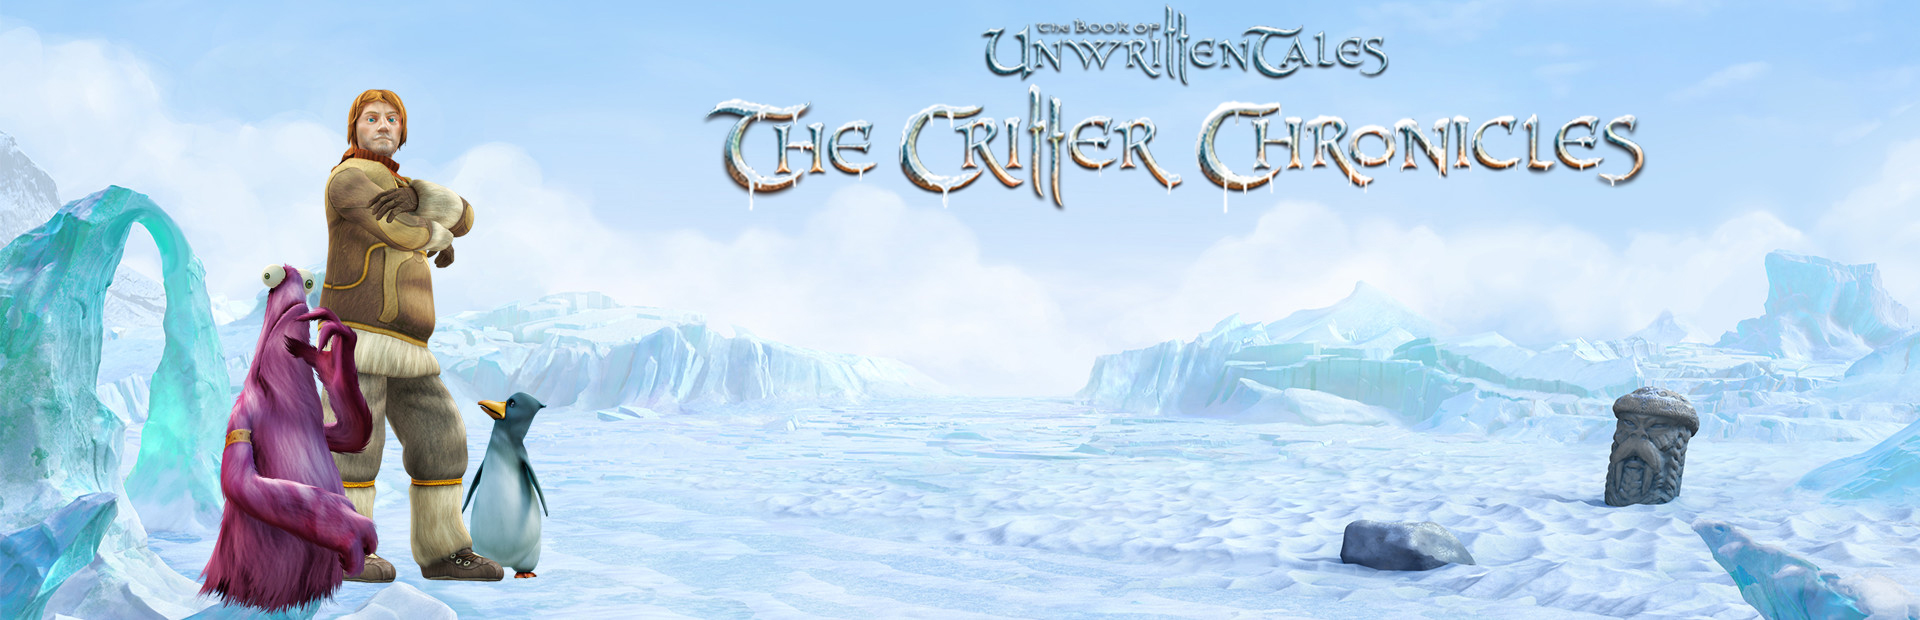 دانلود بازی The Book of Unwritten Tales: The Critter Chronicles برای پی سی | گیمباتو